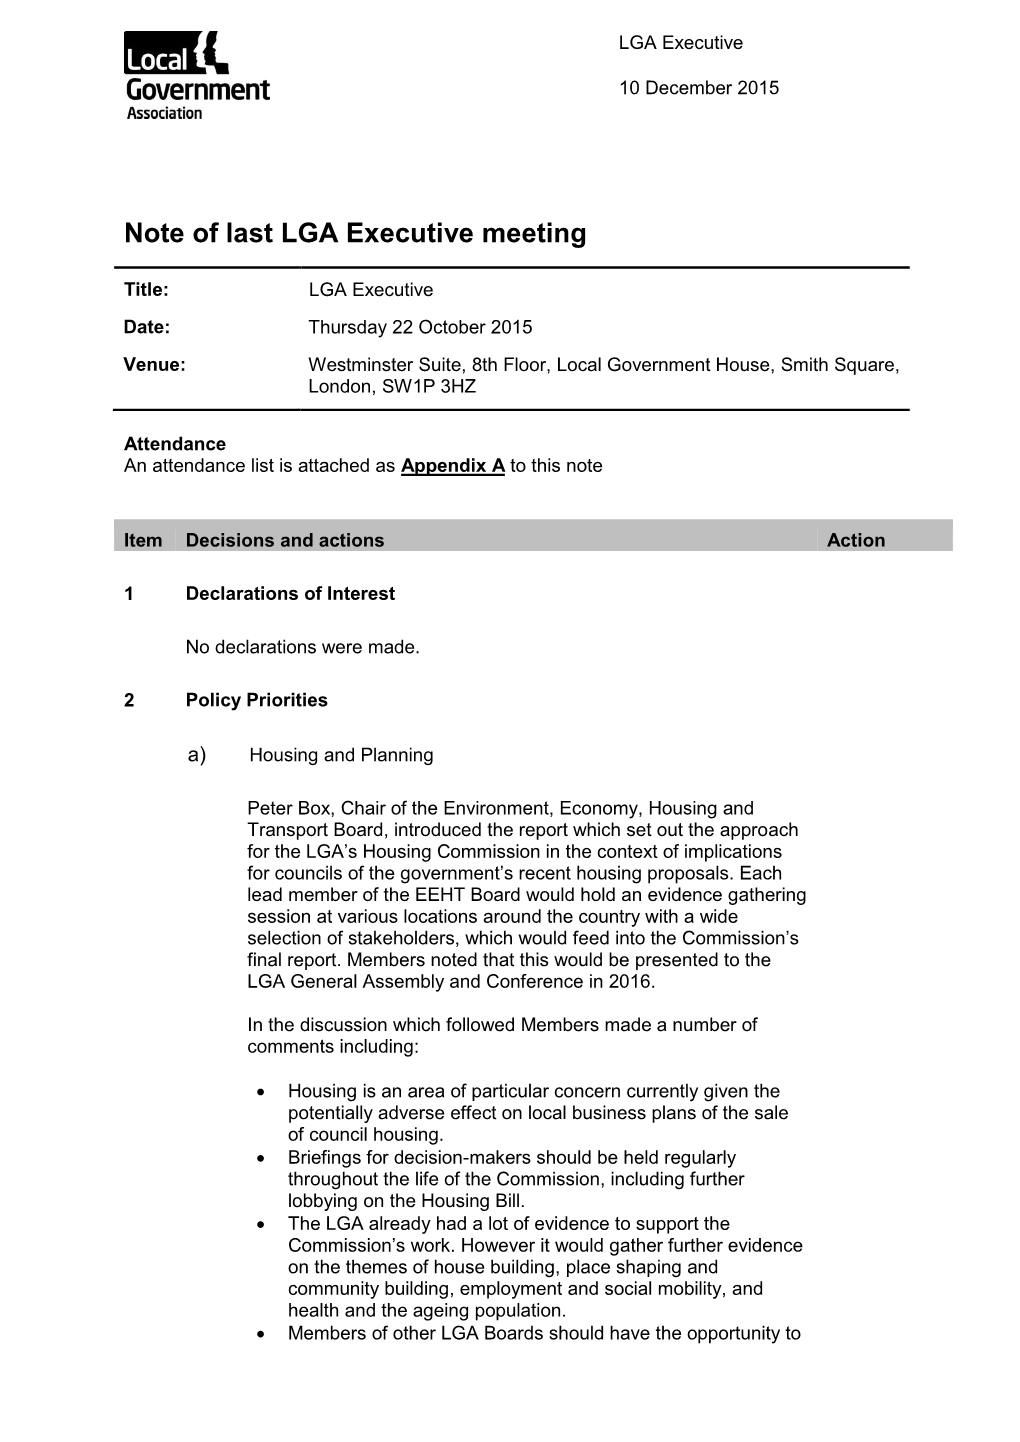 Note of Last LGA Executive Meeting